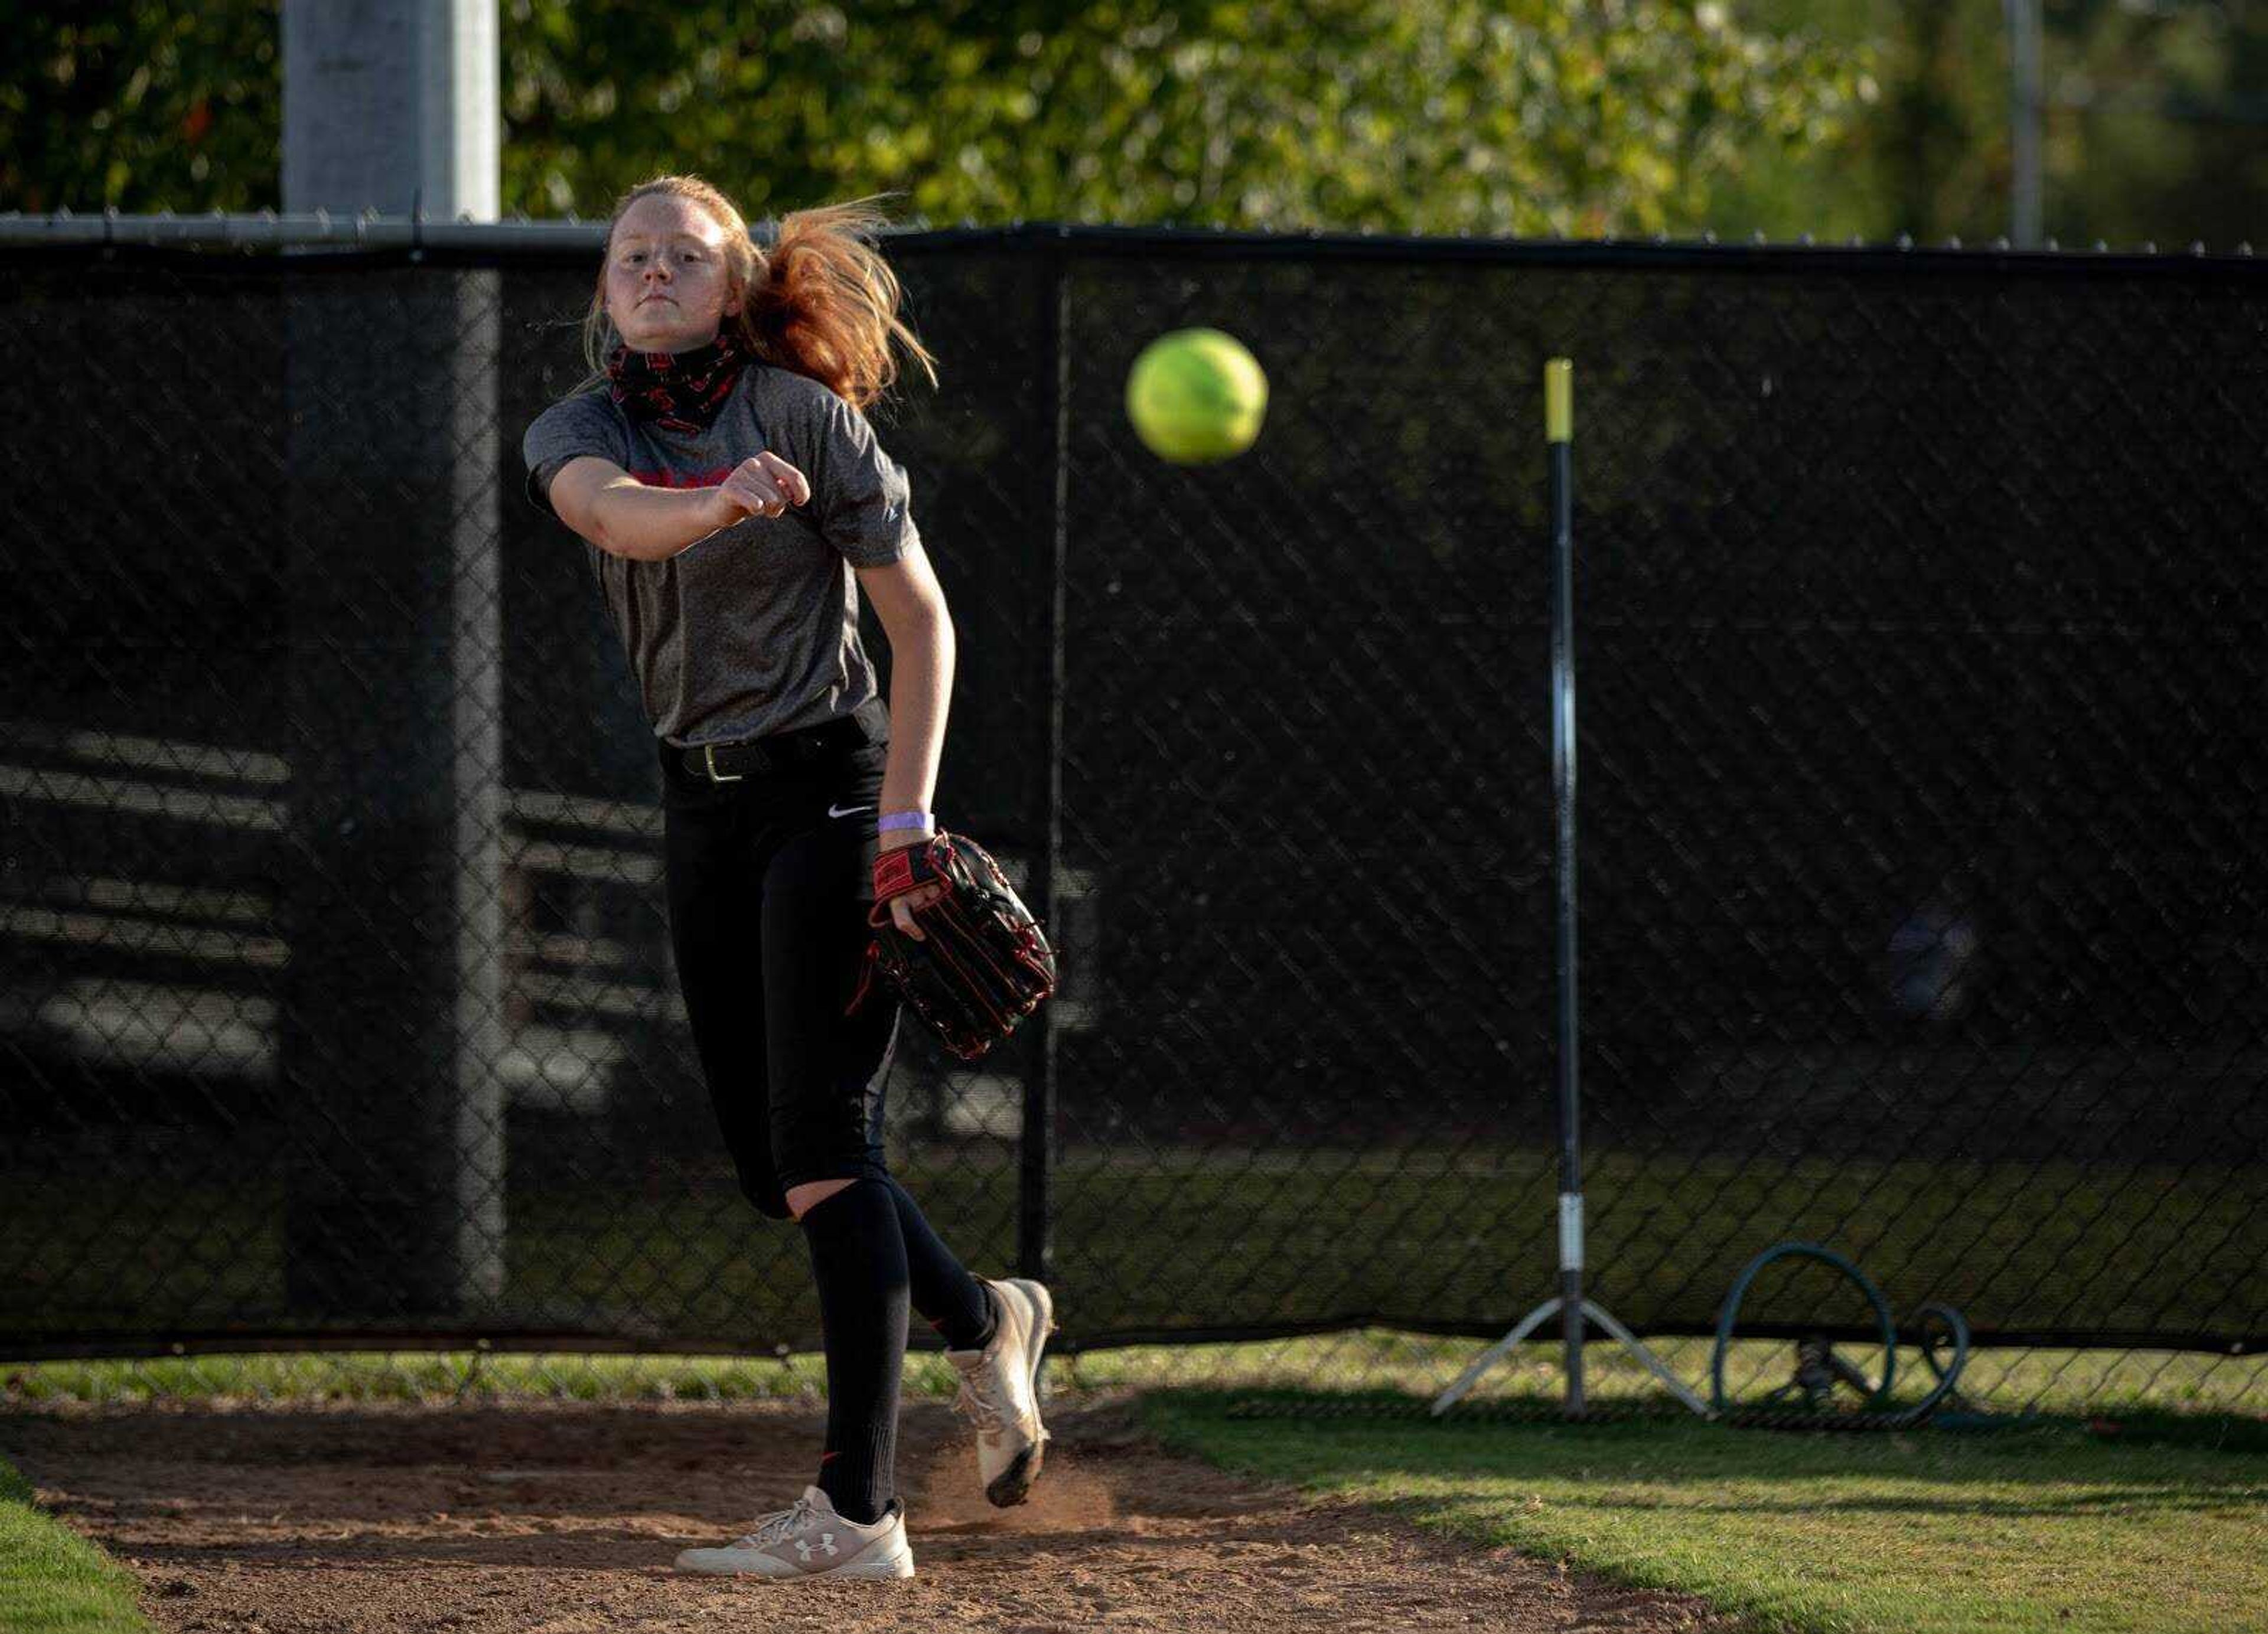 Junior pitcher Rachel Rook throws a bullpen at a practice in Cape Girardeau, Missouri.